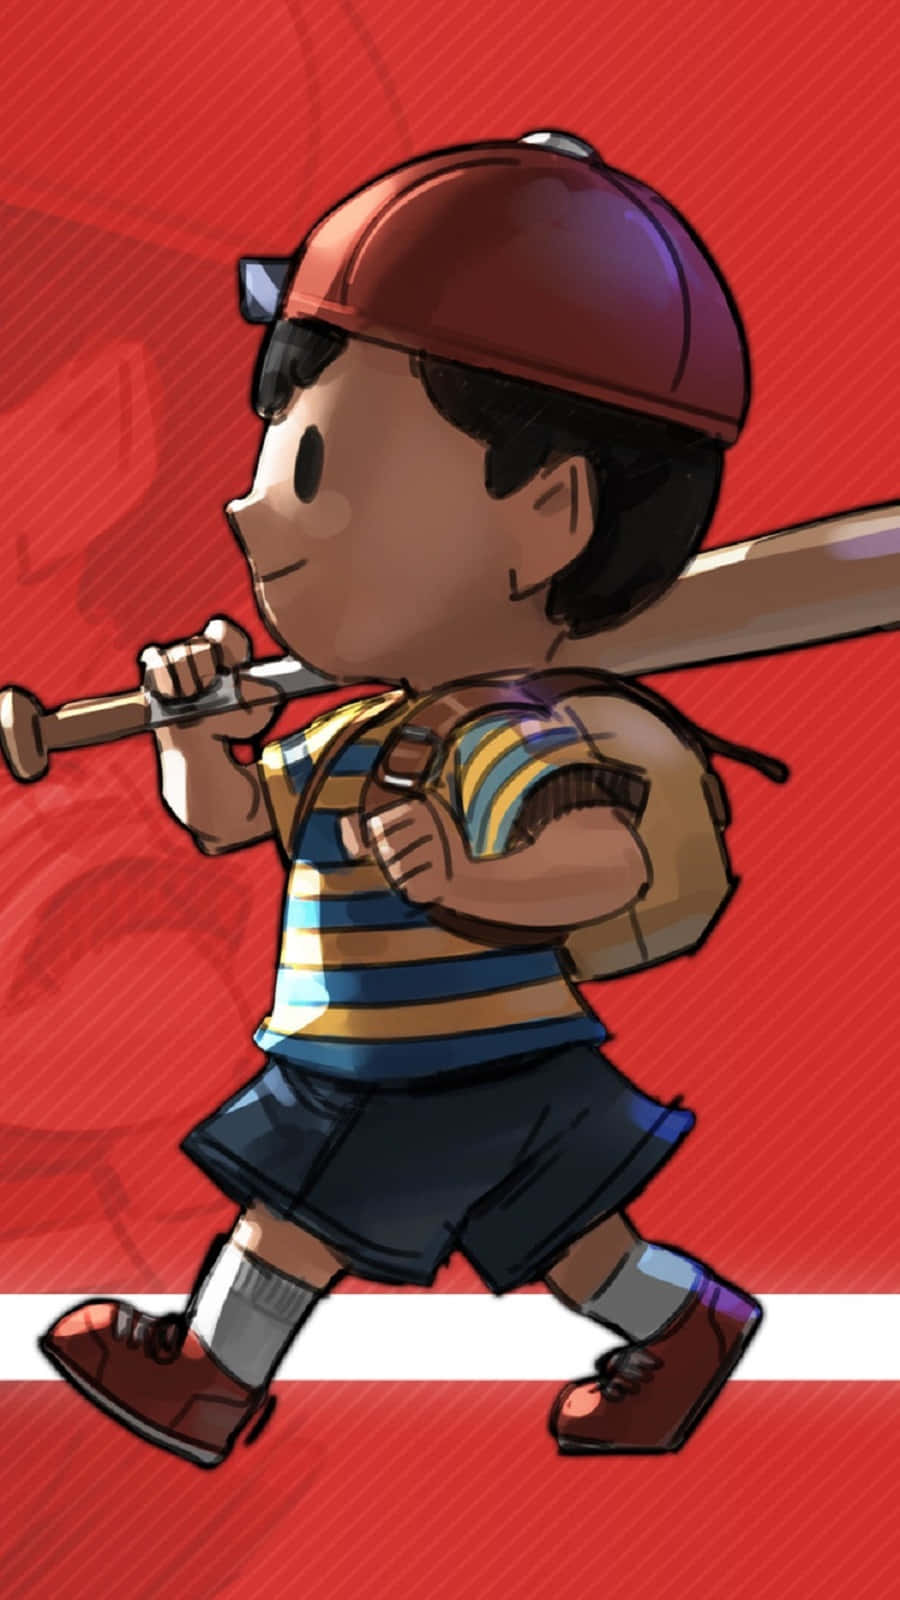 A Cartoon Boy Holding A Baseball Bat